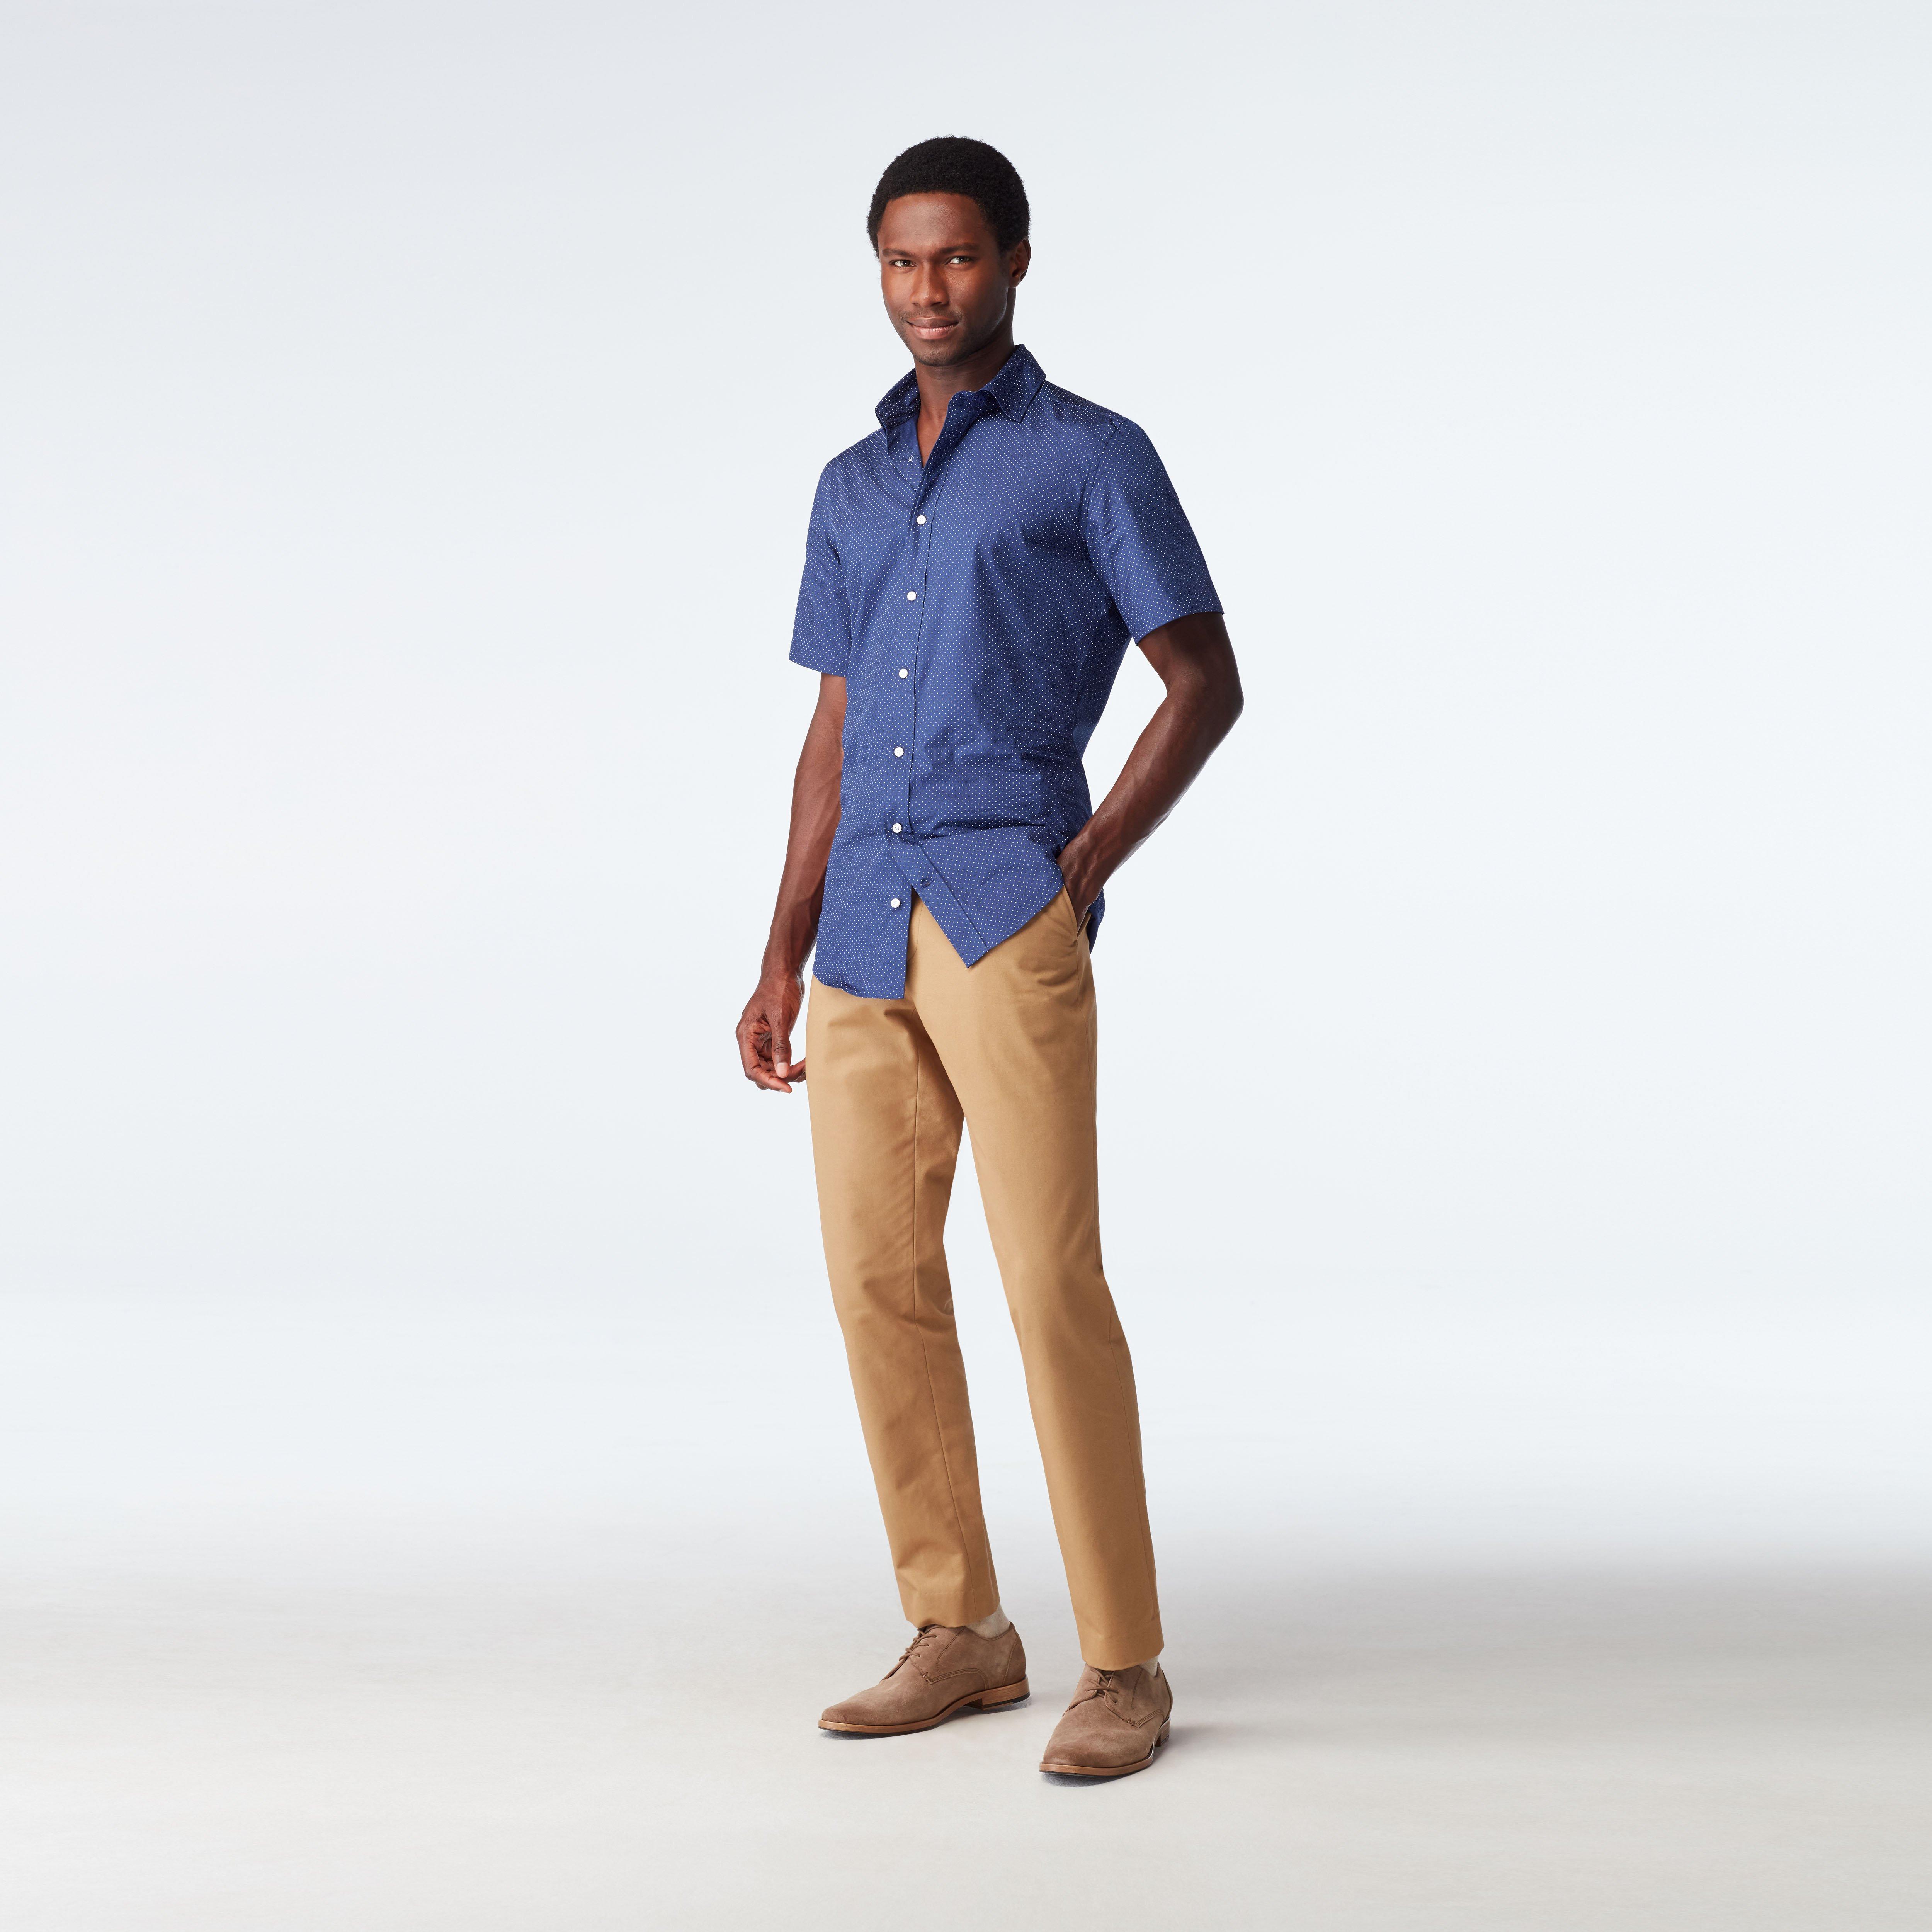 Goodfellow & Co Men's Button Down Denim Shirt Colors Blue and Gray Sizes  S-XXL | eBay